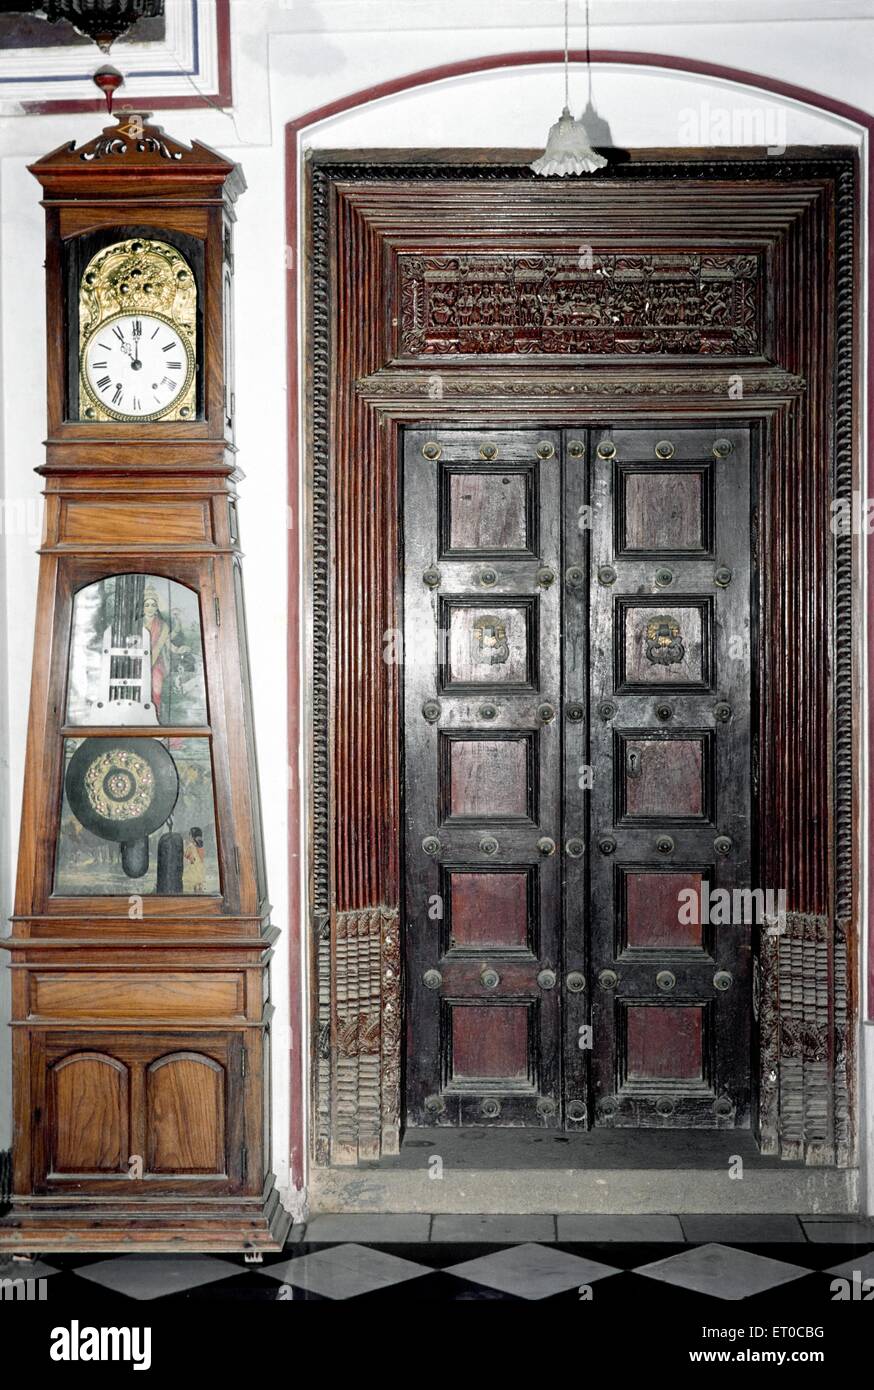 Old grandfather clock, Nattukotai Chettiar, Nagarathar, Chettinad, Chettinadu, Pudukottai, Sivaganga district, Tamil Nadu, India, Asia Stock Photo